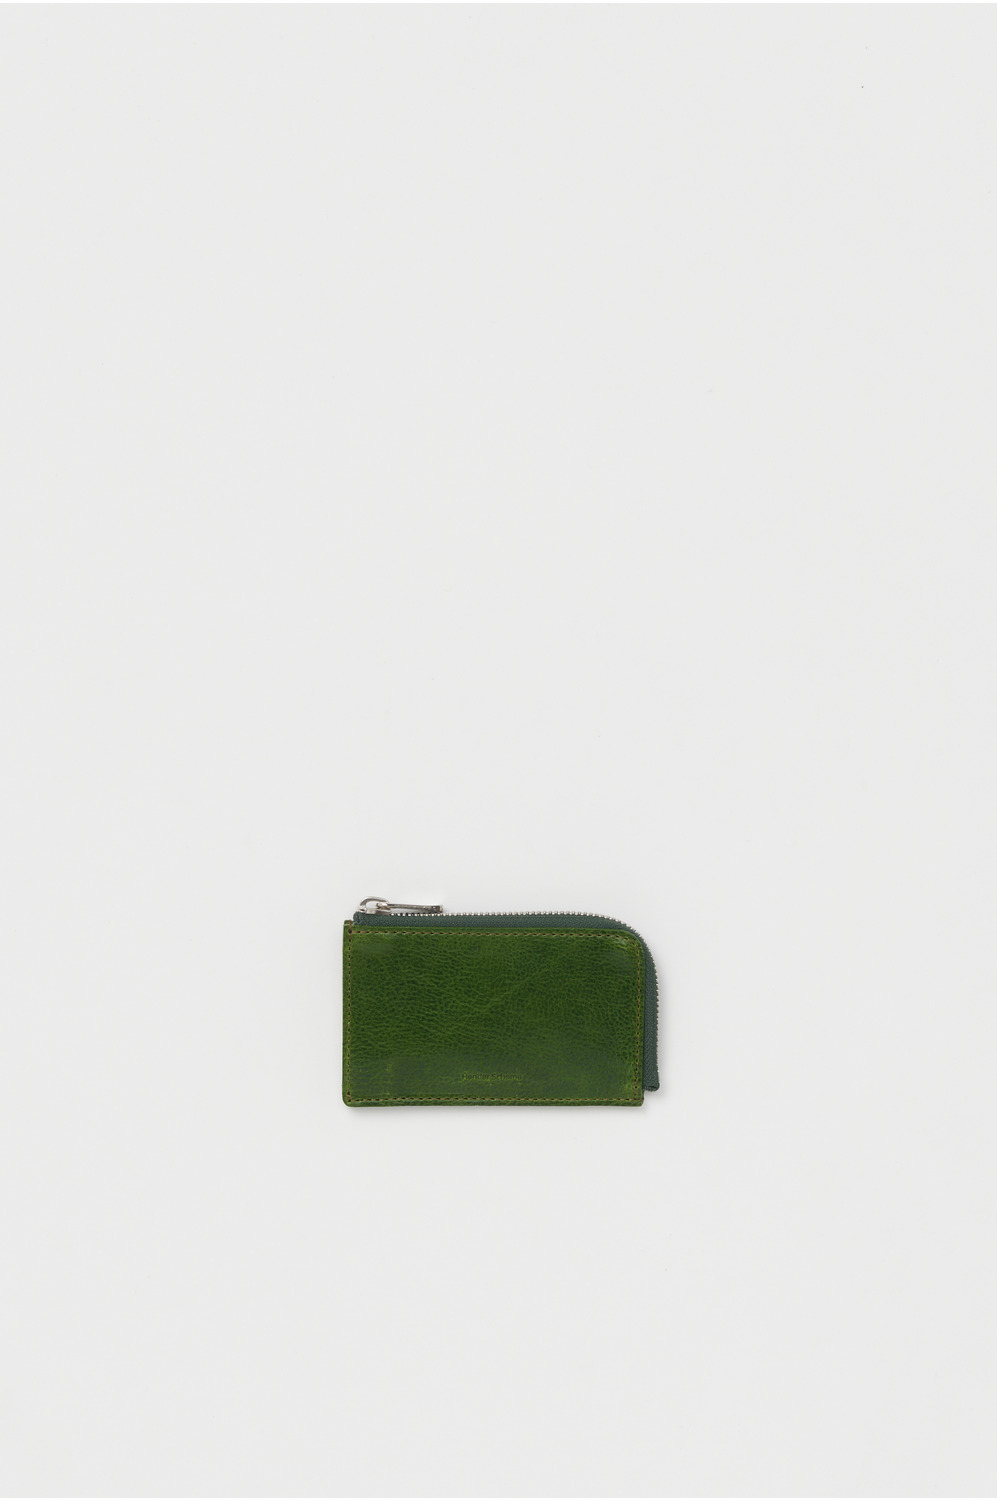 L zip wallet 詳細画像 lime green 1